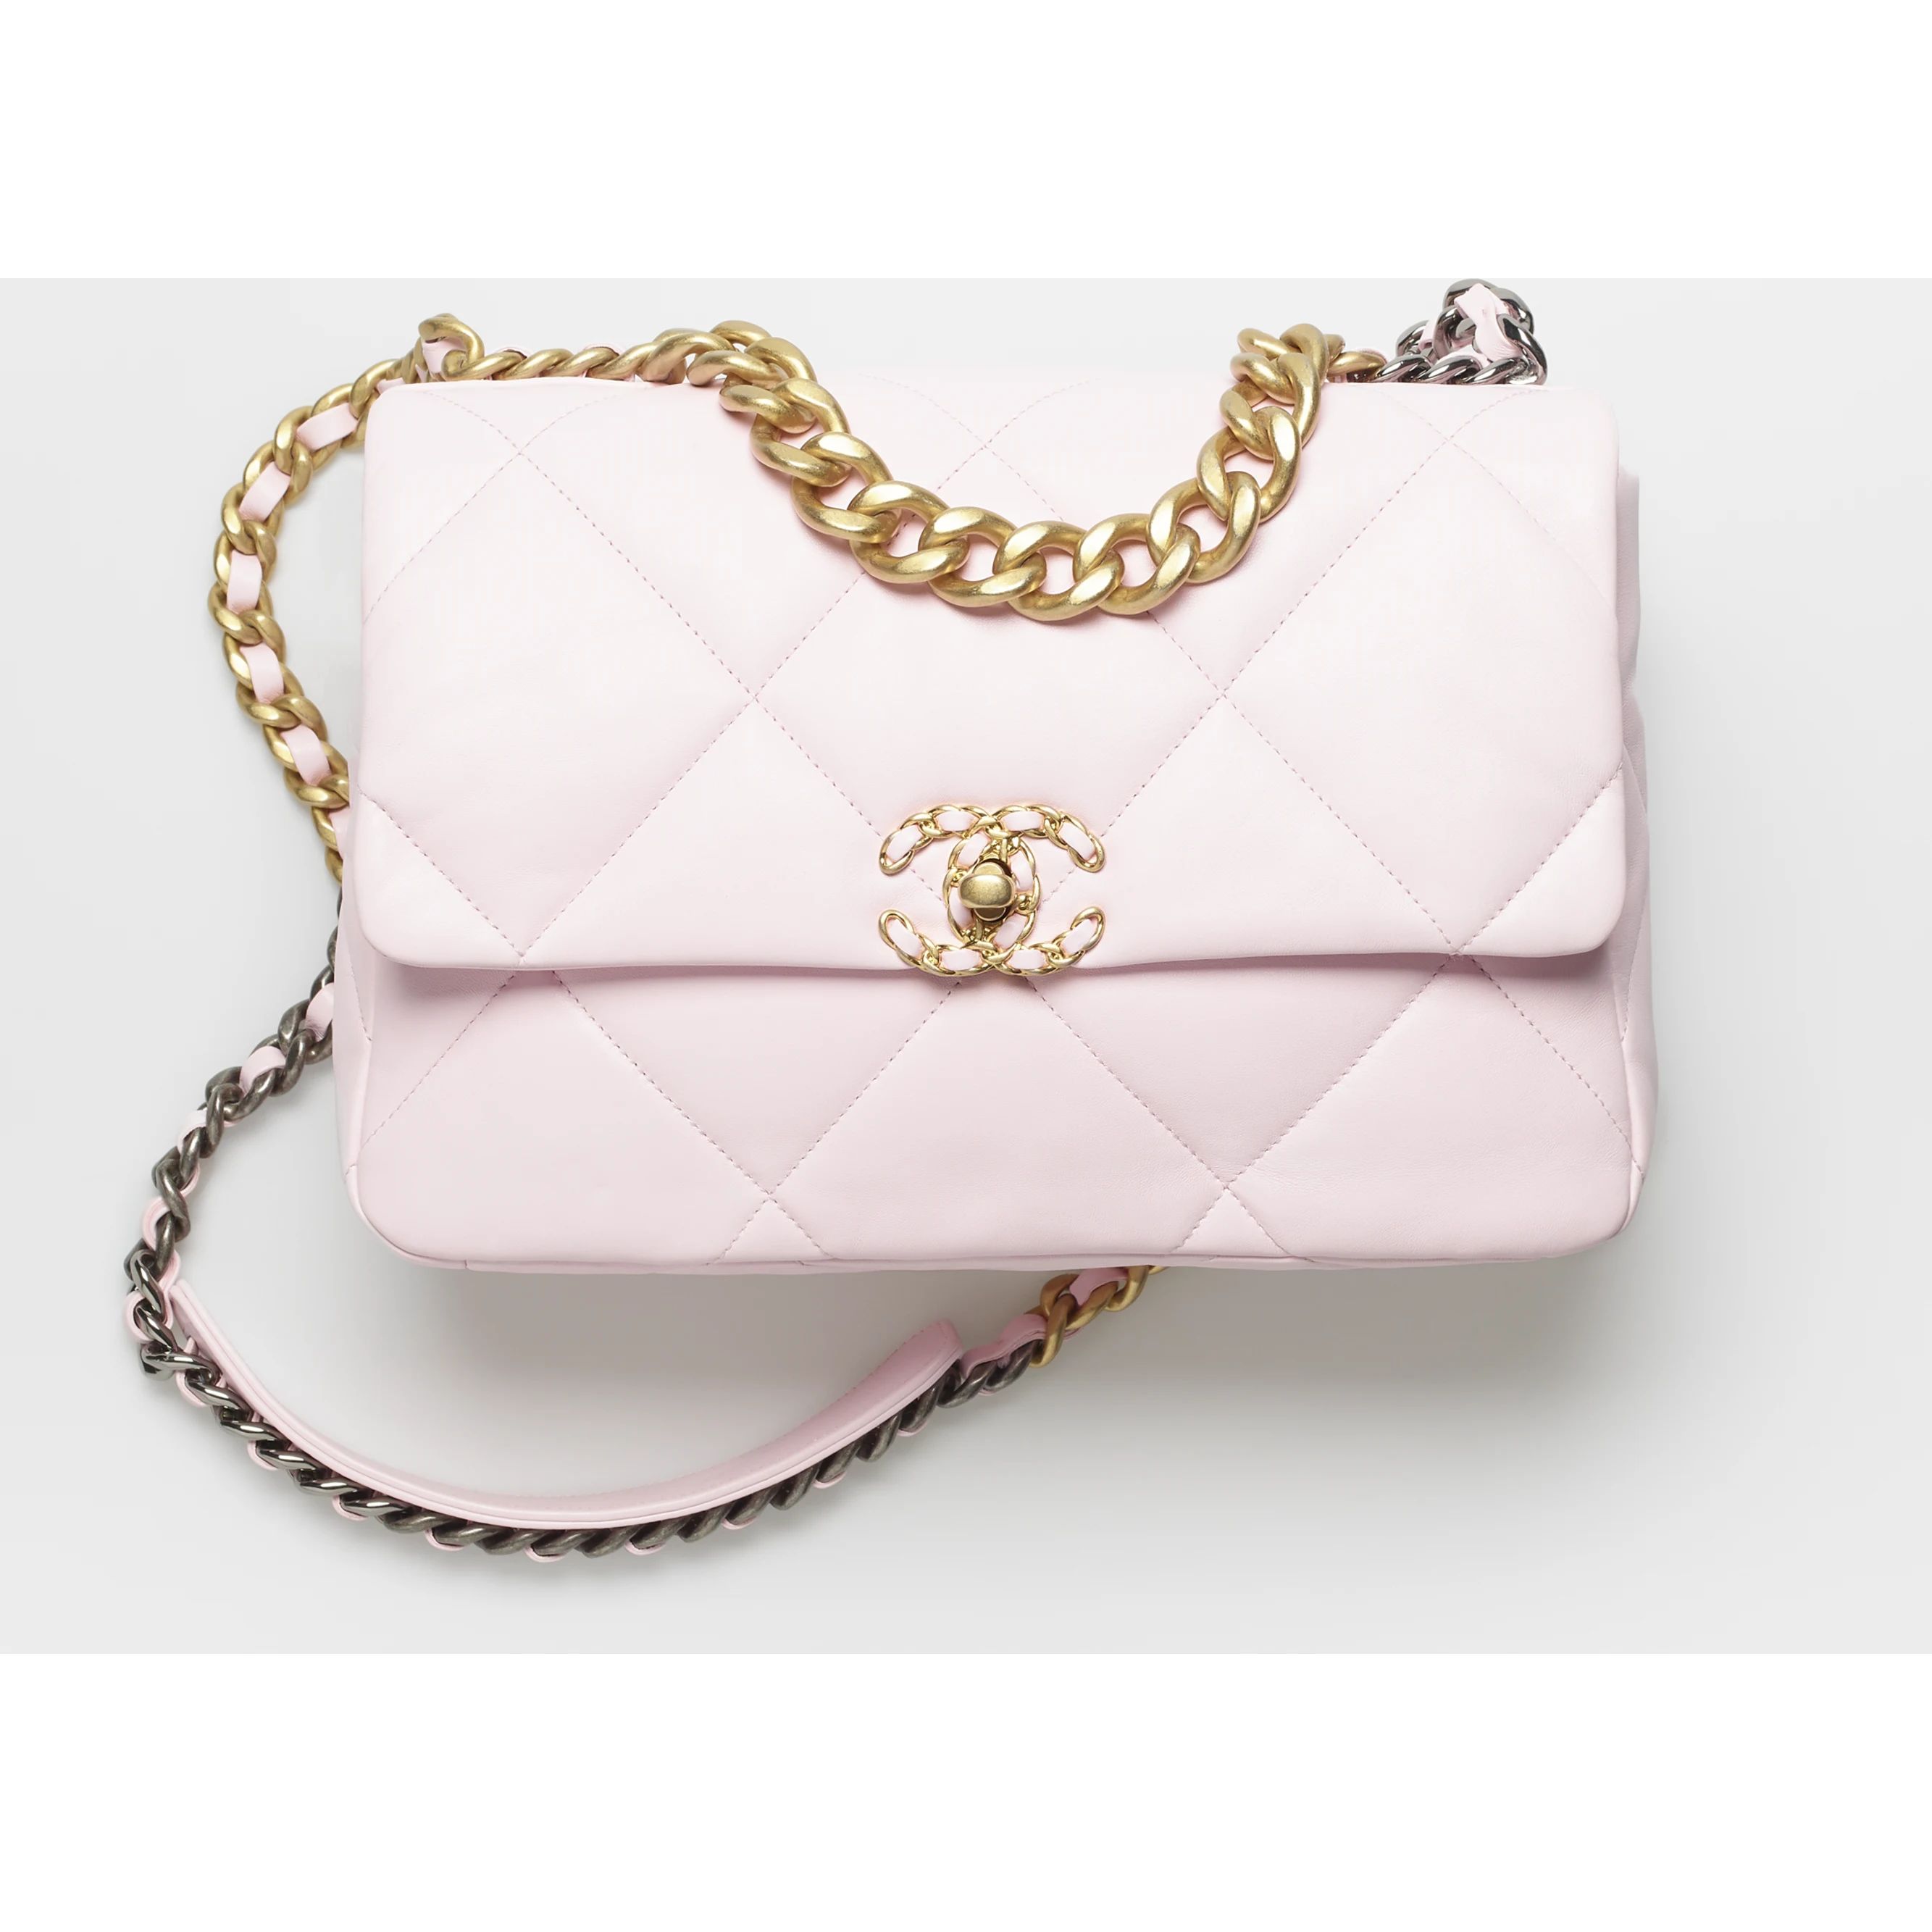 CHANEL 19 Large Handbag - Lambskin, gold-tone, silver-tone & ruthenium-finish metal — Fashion |... | Chanel, Inc. (US)